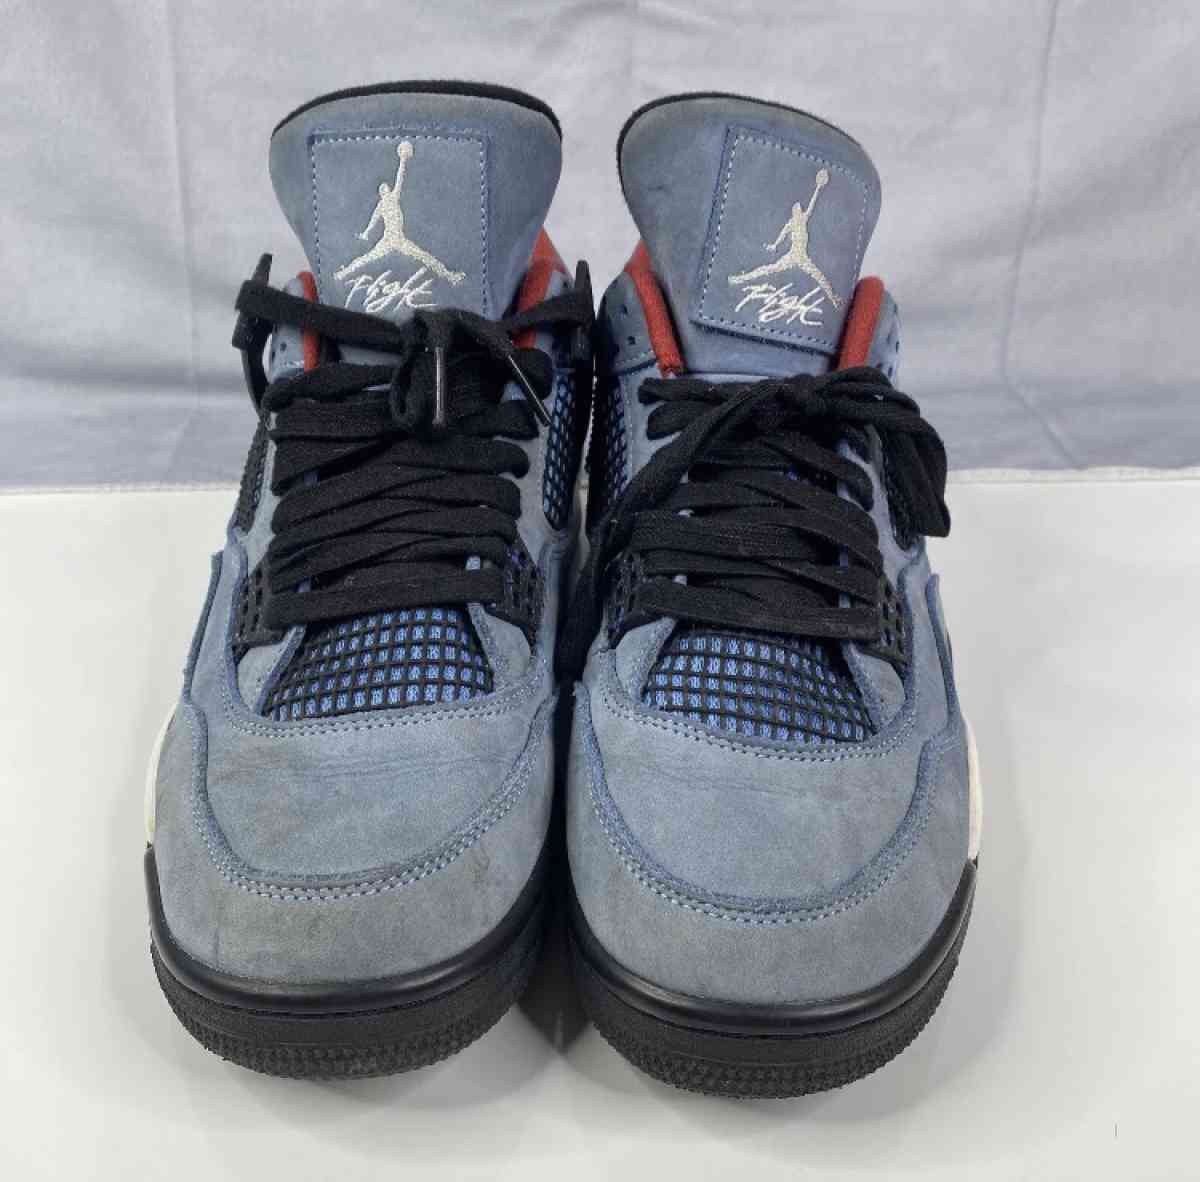 2 pairs of air jordans